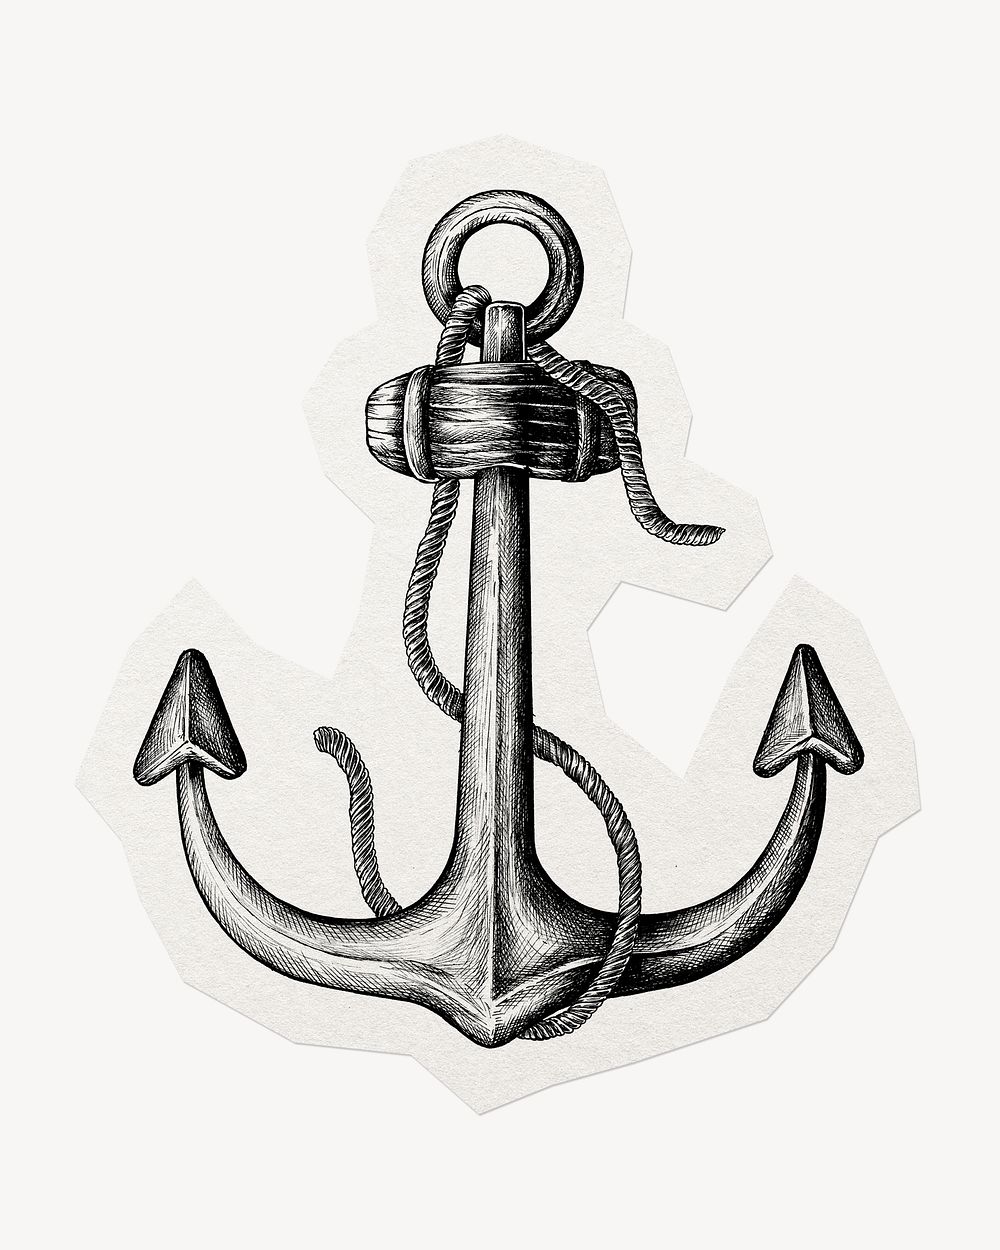 Vintage anchor illustration clipart sticker, paper craft collage element